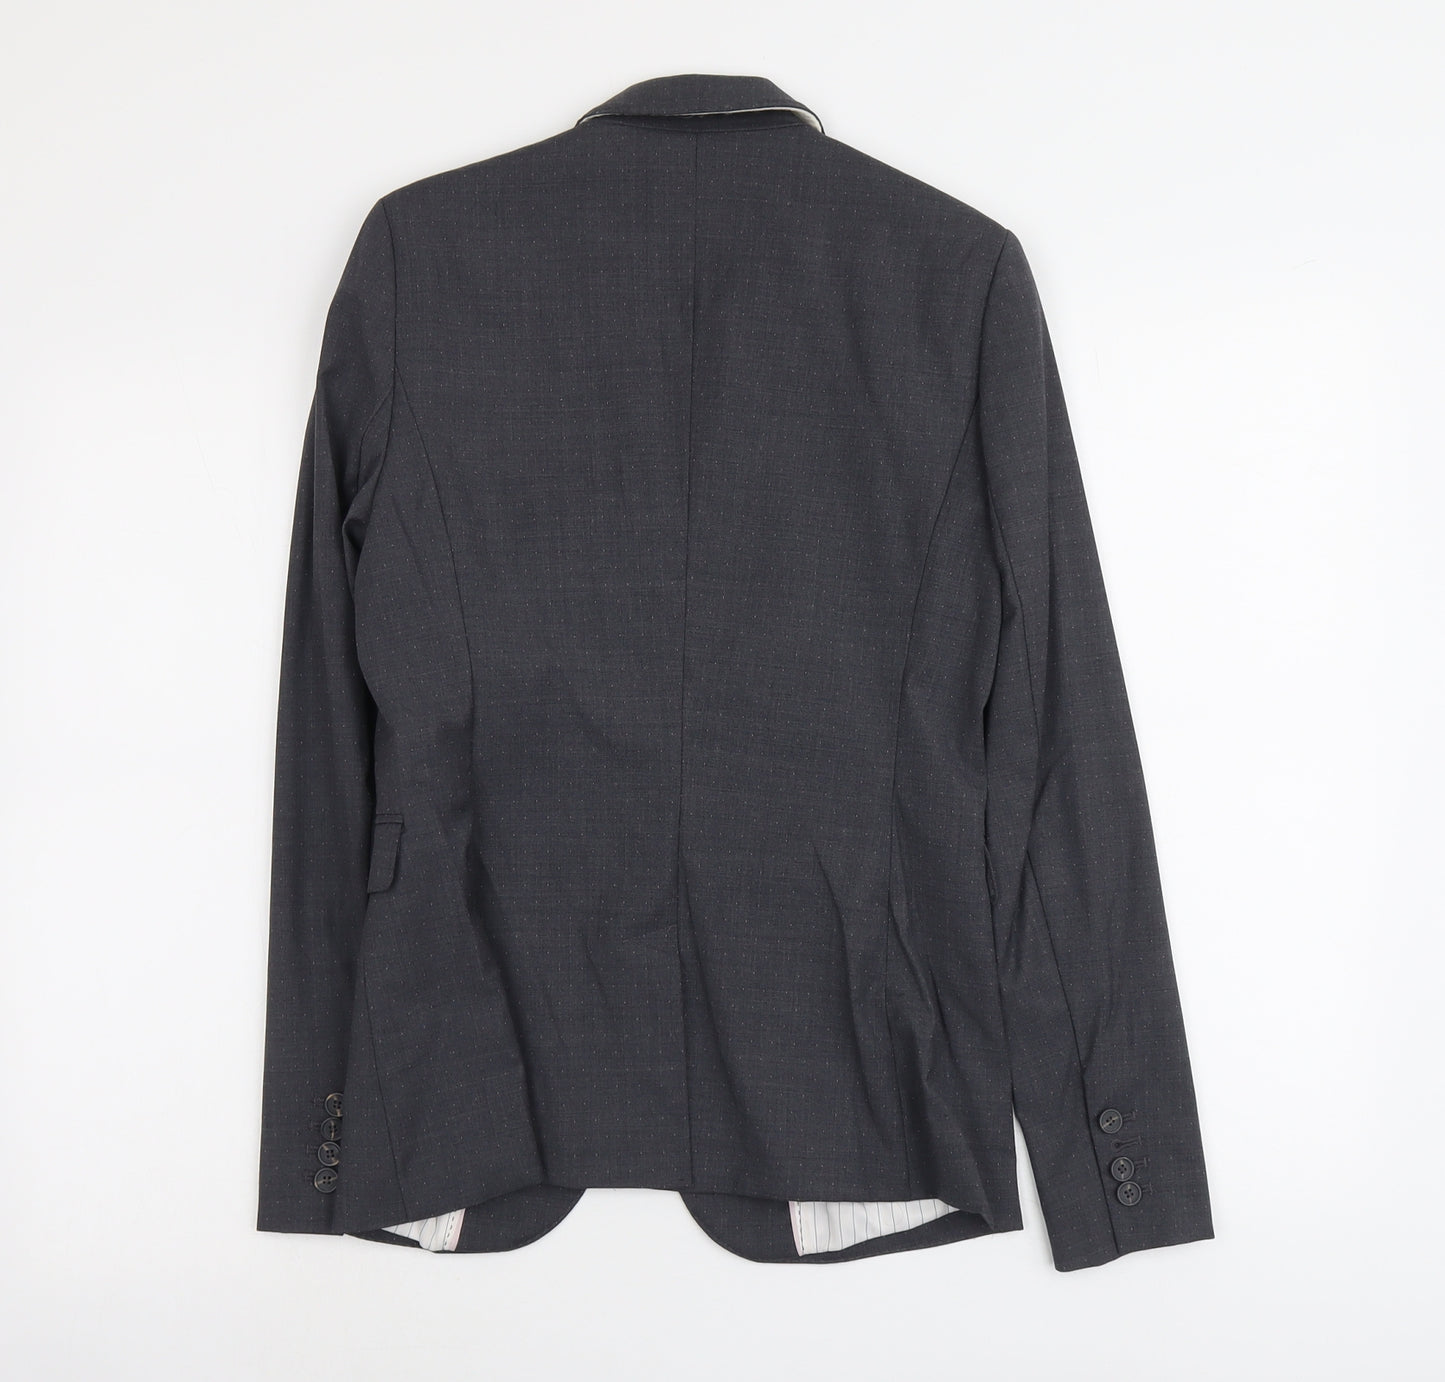 NEXT Womens Grey Wool Jacket Suit Jacket Size 8